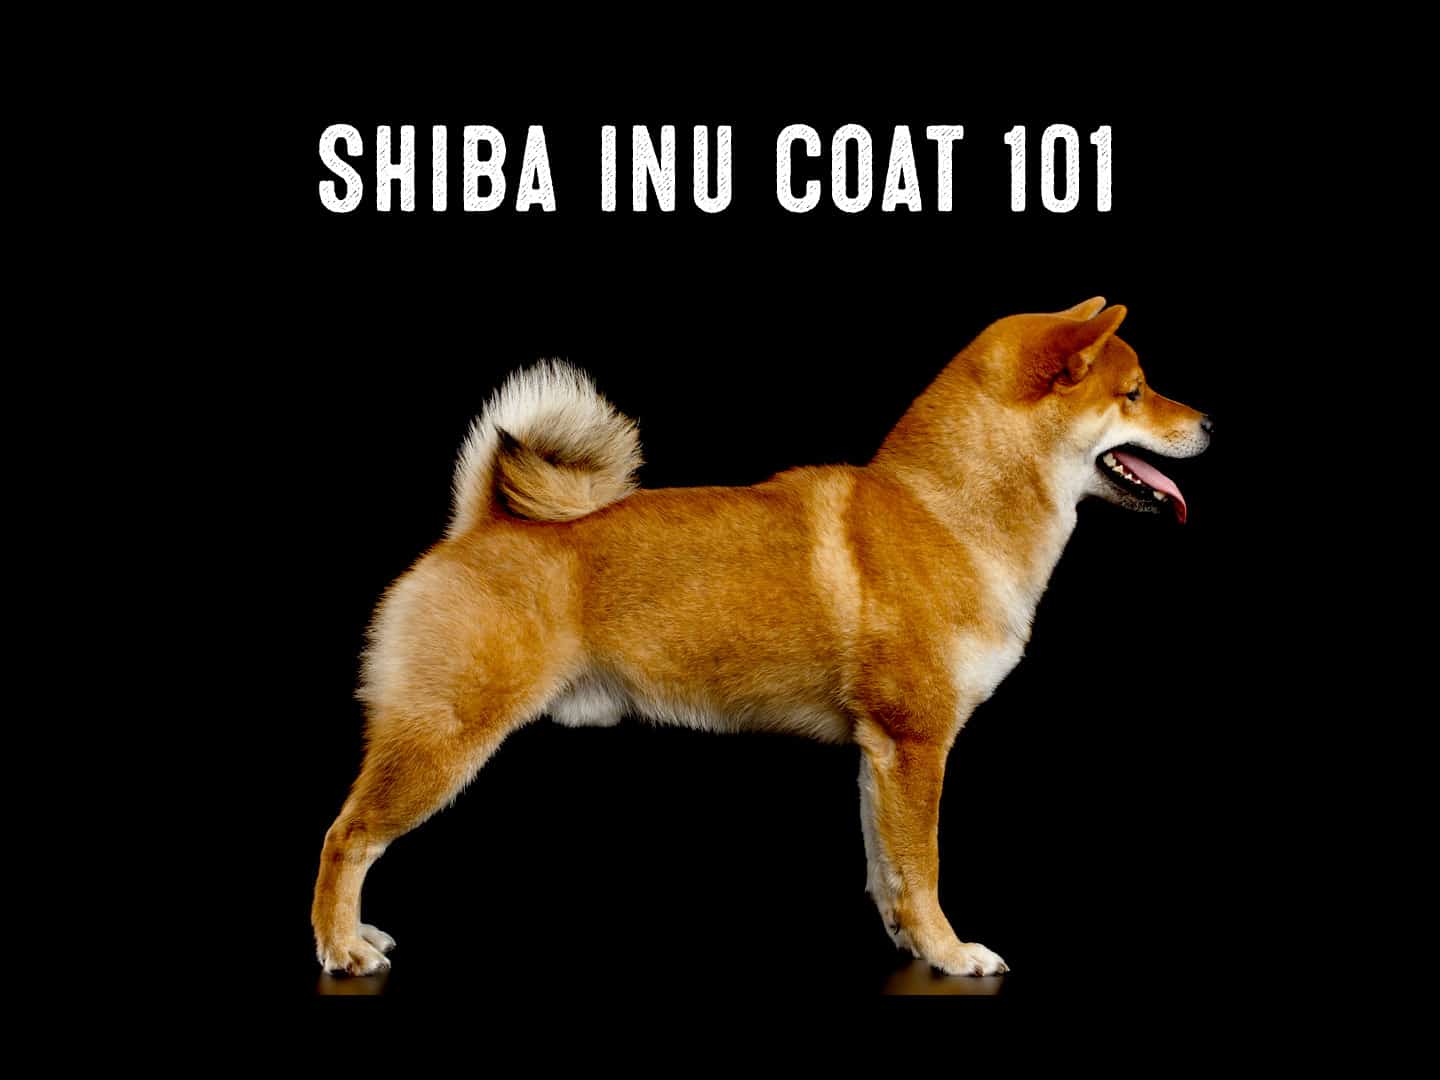 shiba in coat 101 graphic